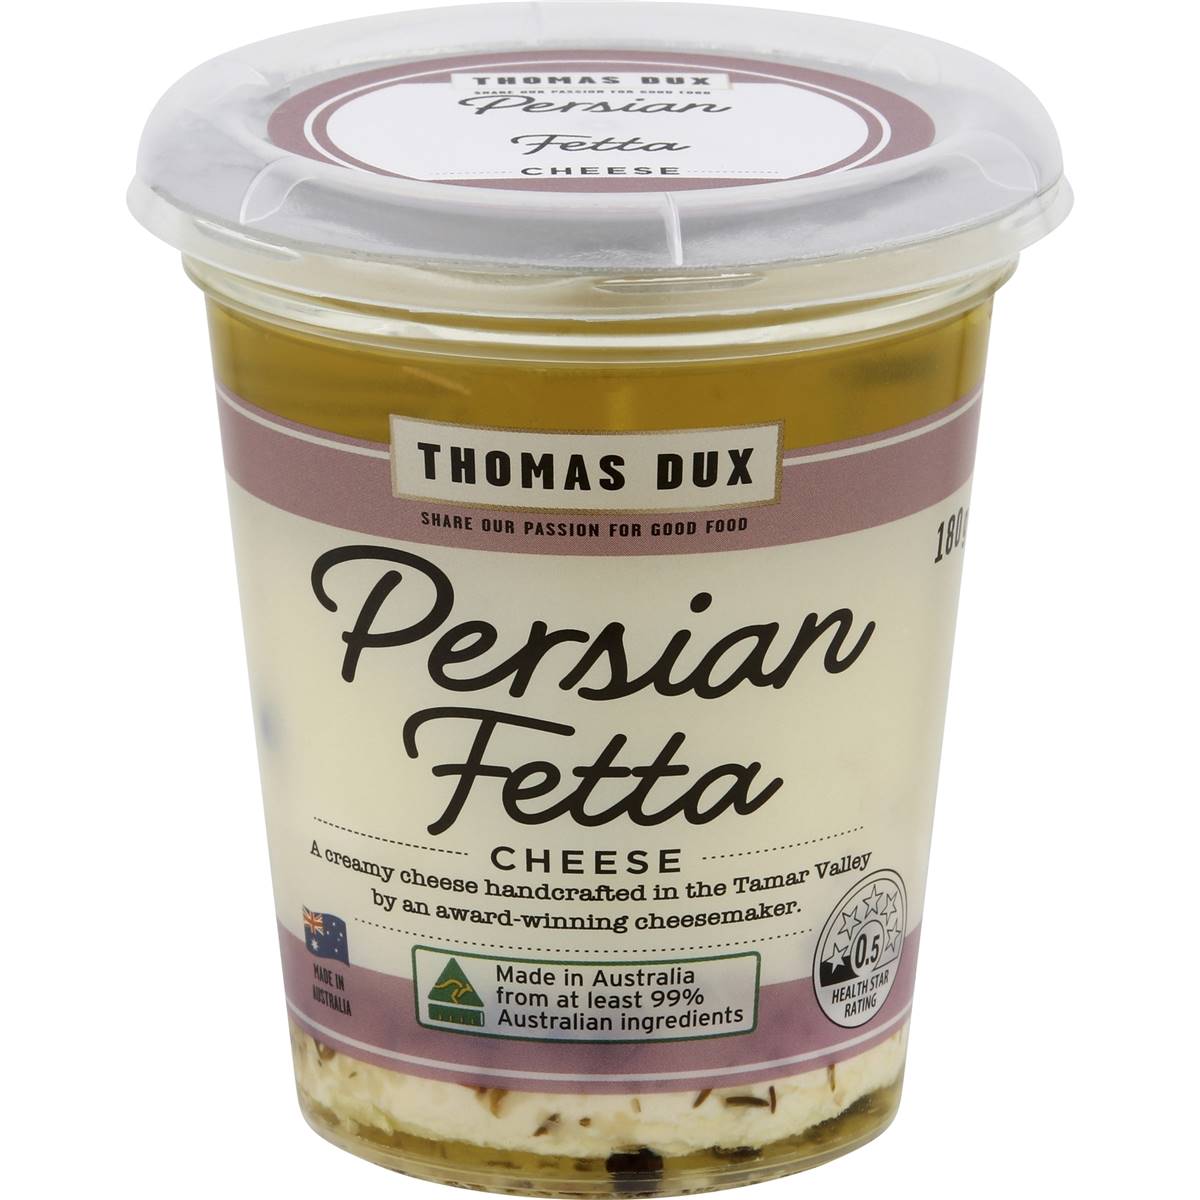 Calories in Thomas Dux Persian Fetta Cheese